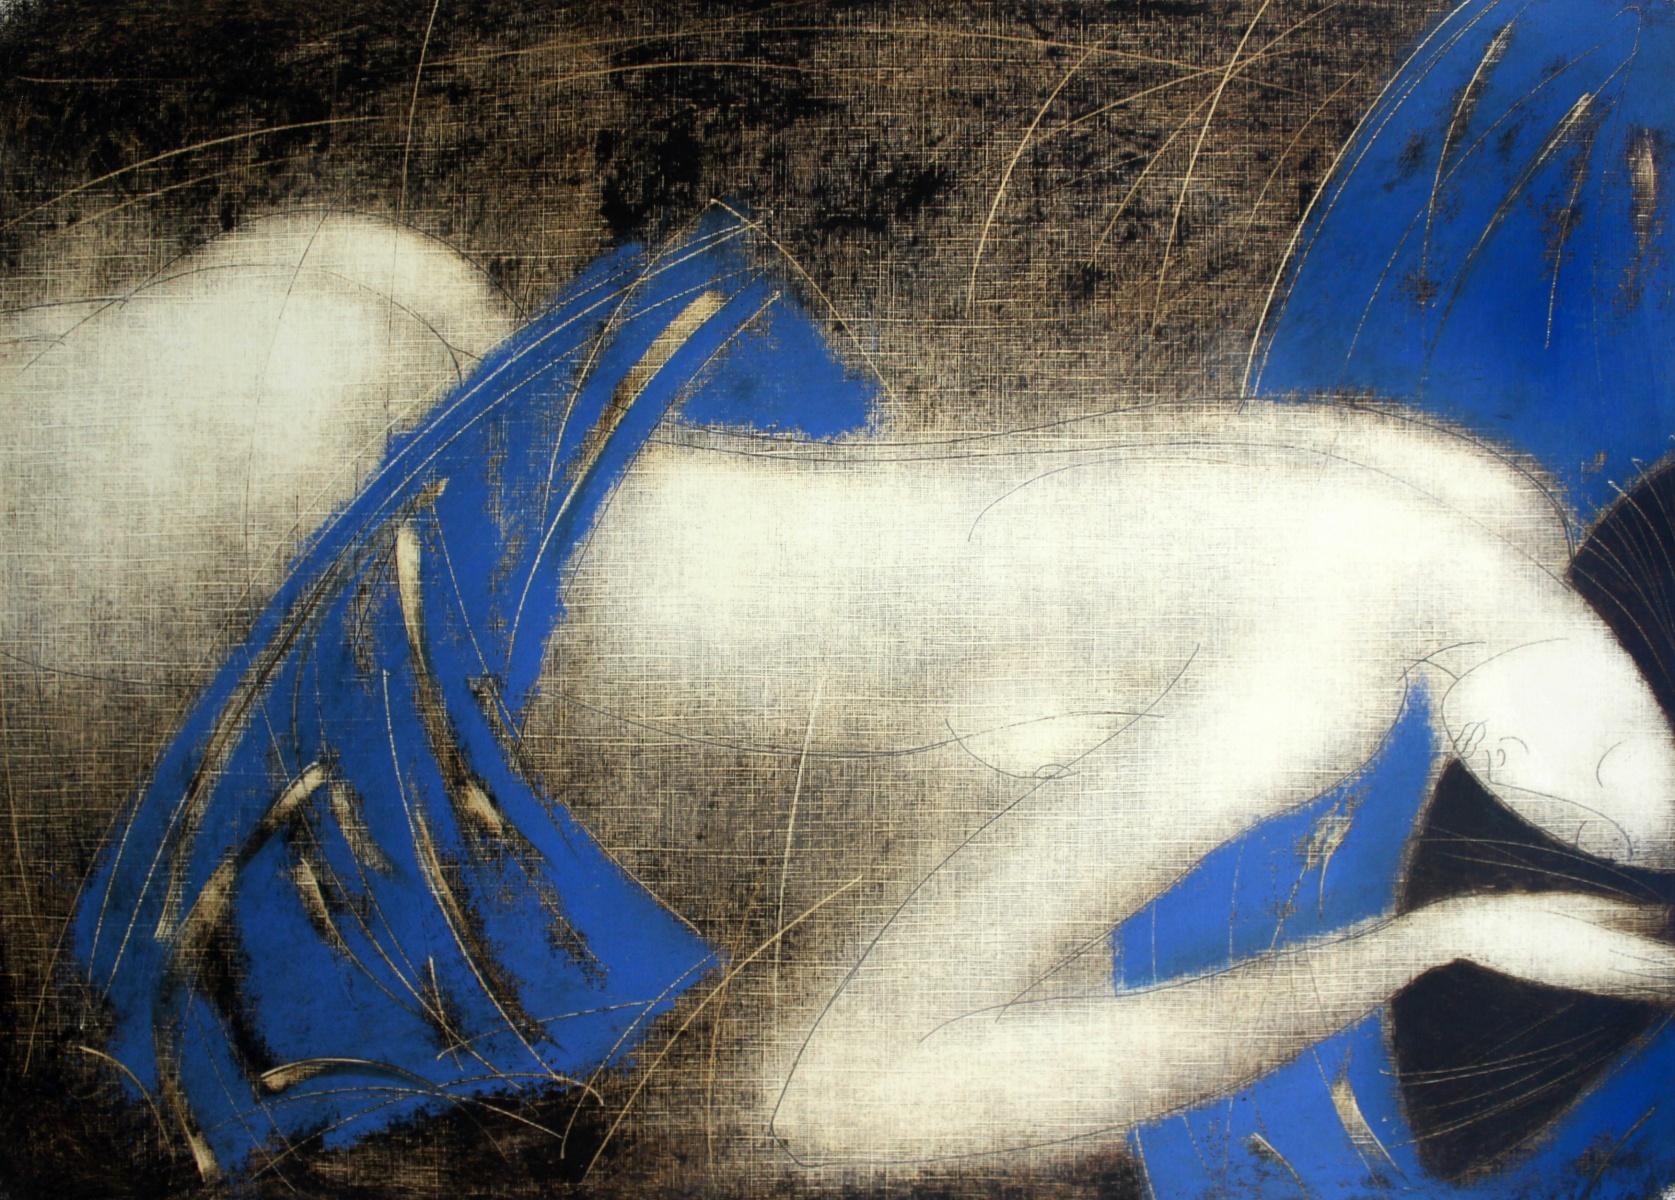 Siergiej Timochow Nude Print - Nude - XXI Century, Contemporary Figurative Monotype Print, Blue & grey